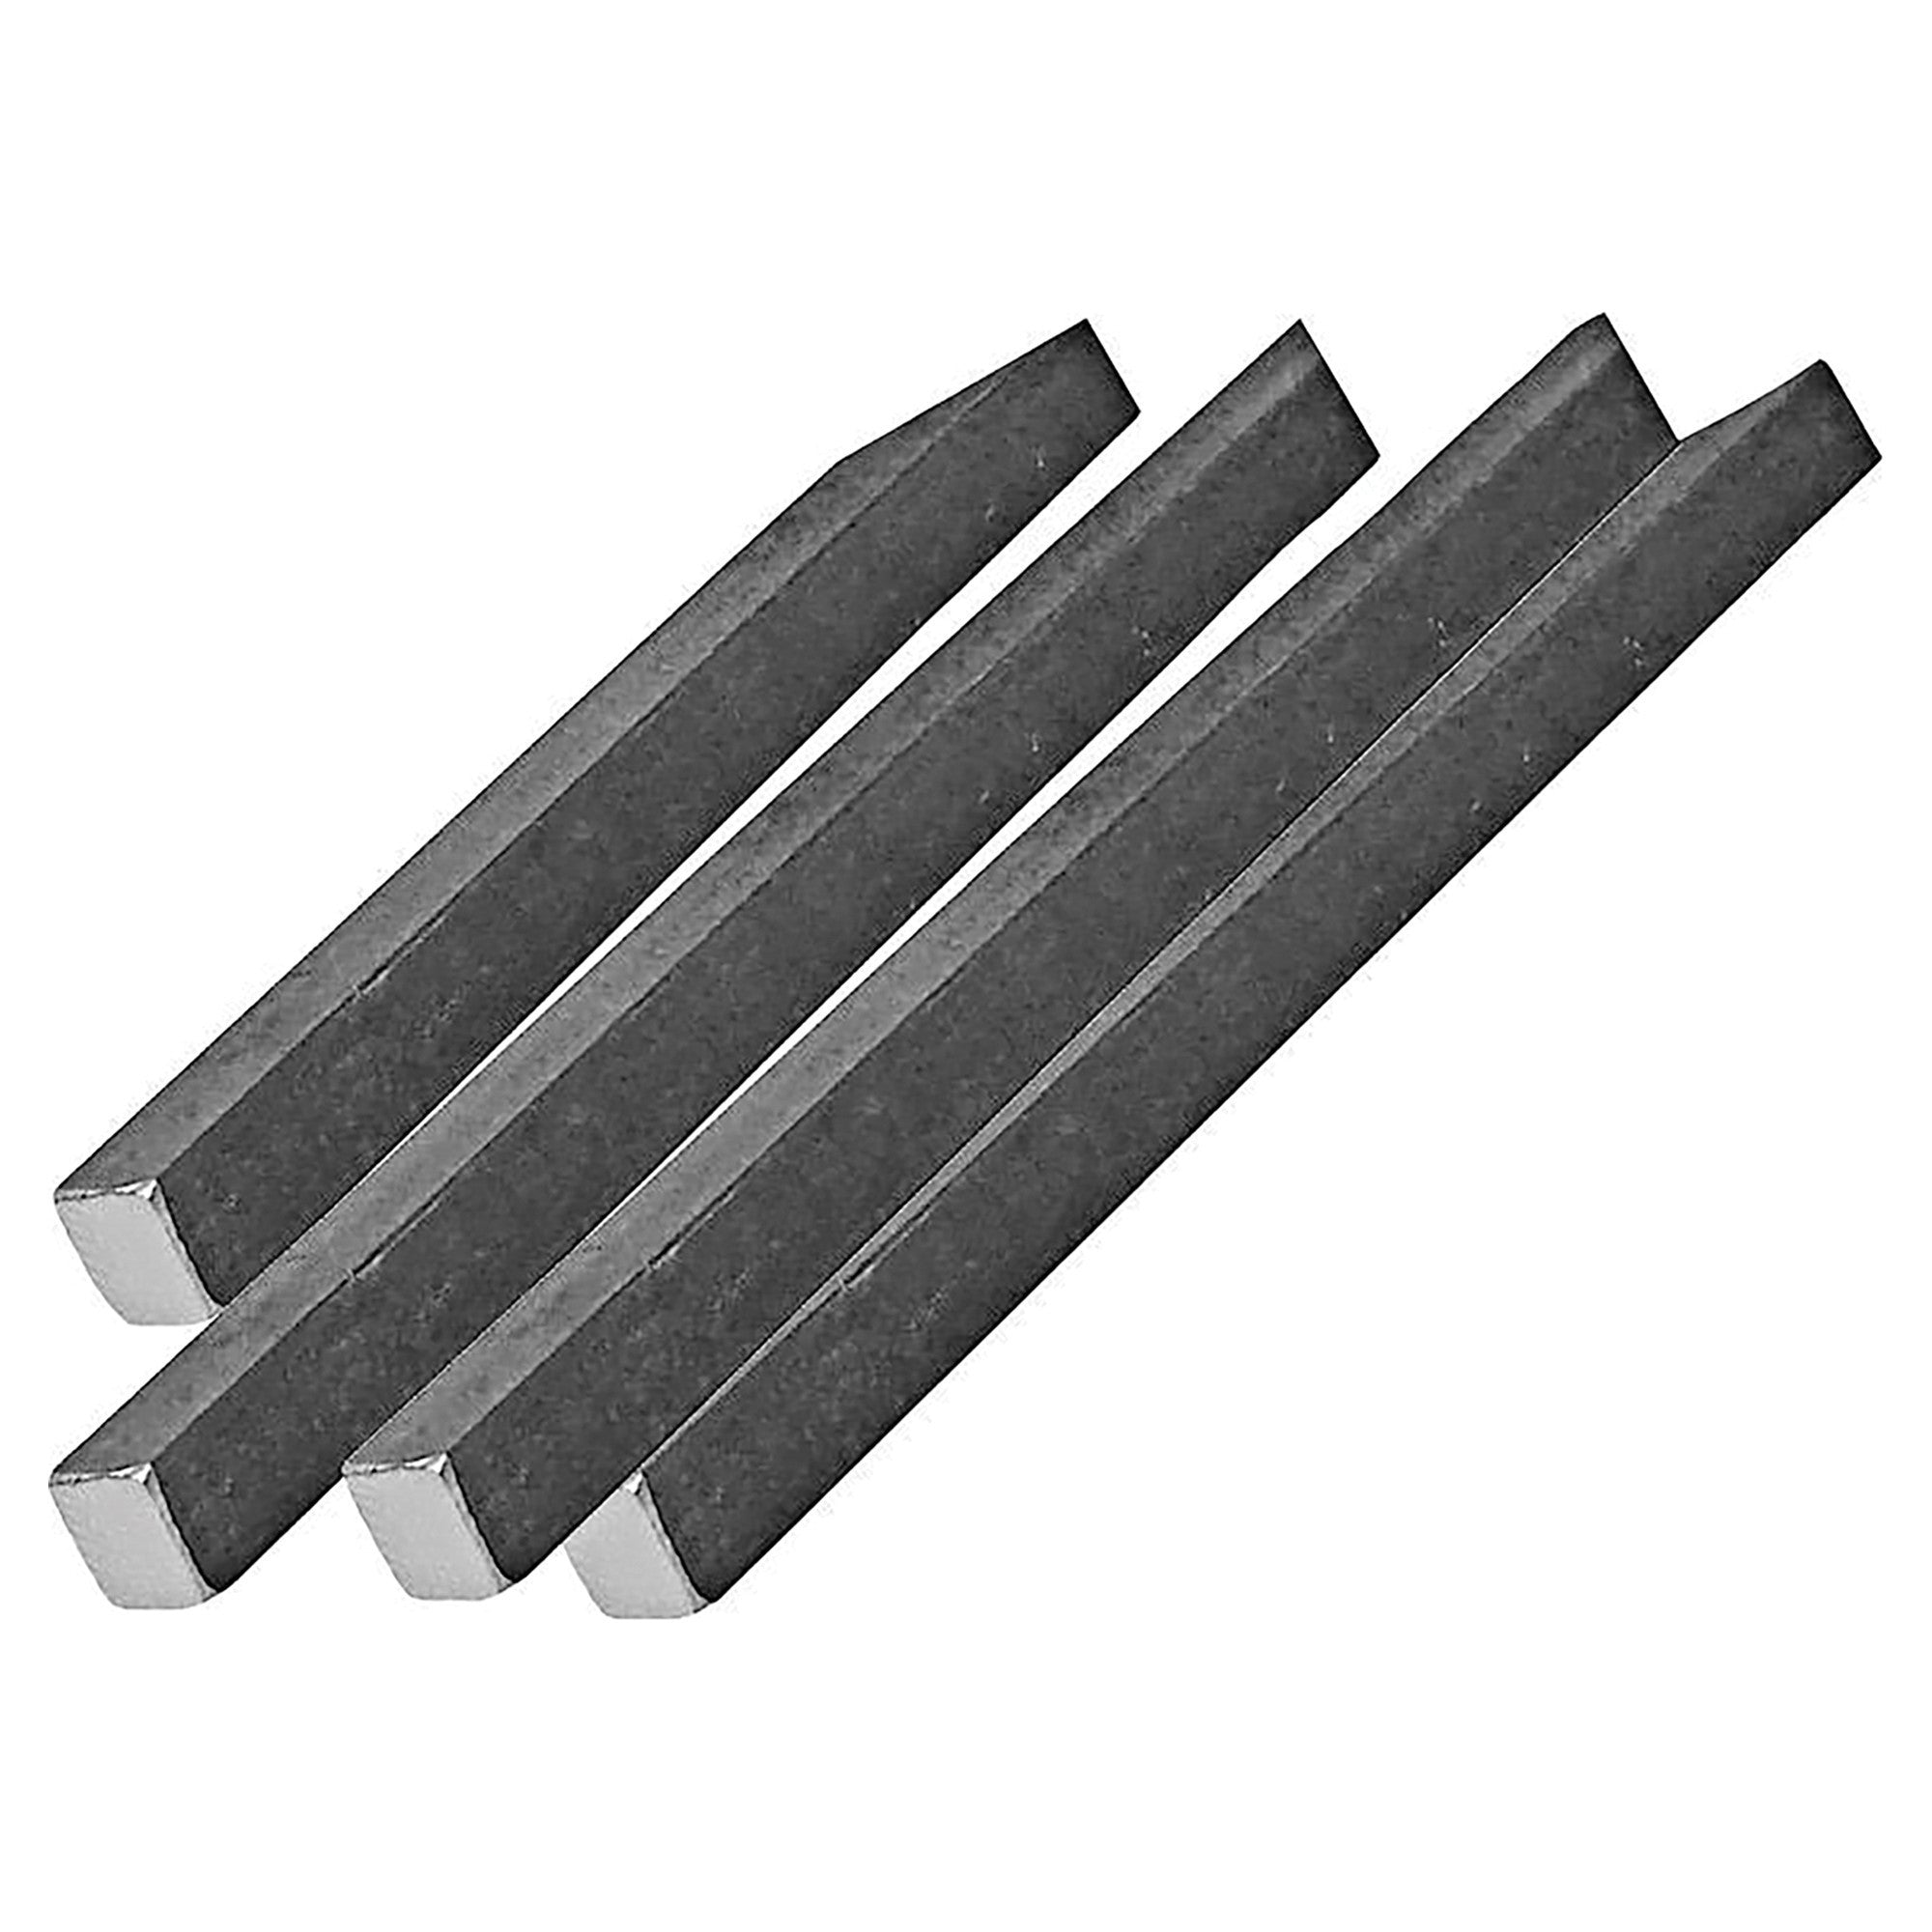 TECNOMAT Metal and PVC profiles